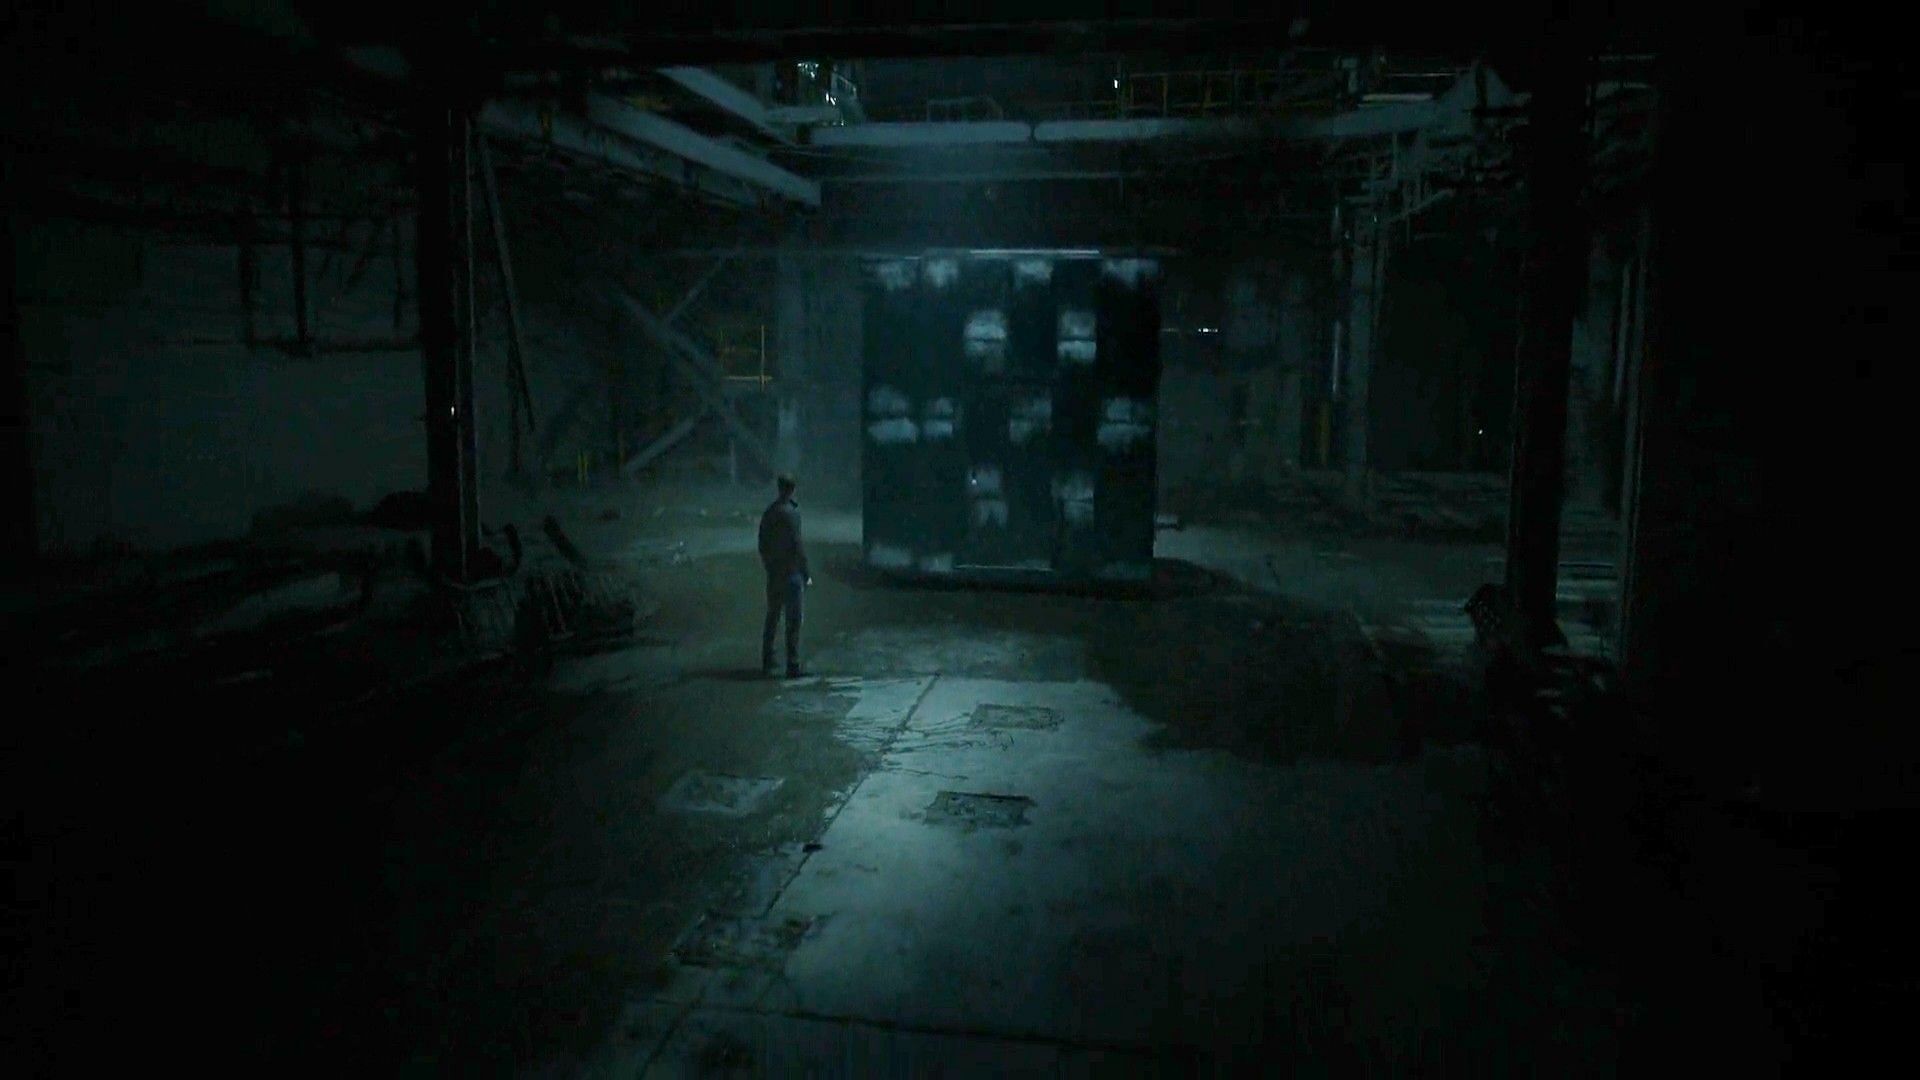 The Box, as seen in Dark Matter (Image via Apple TV+)